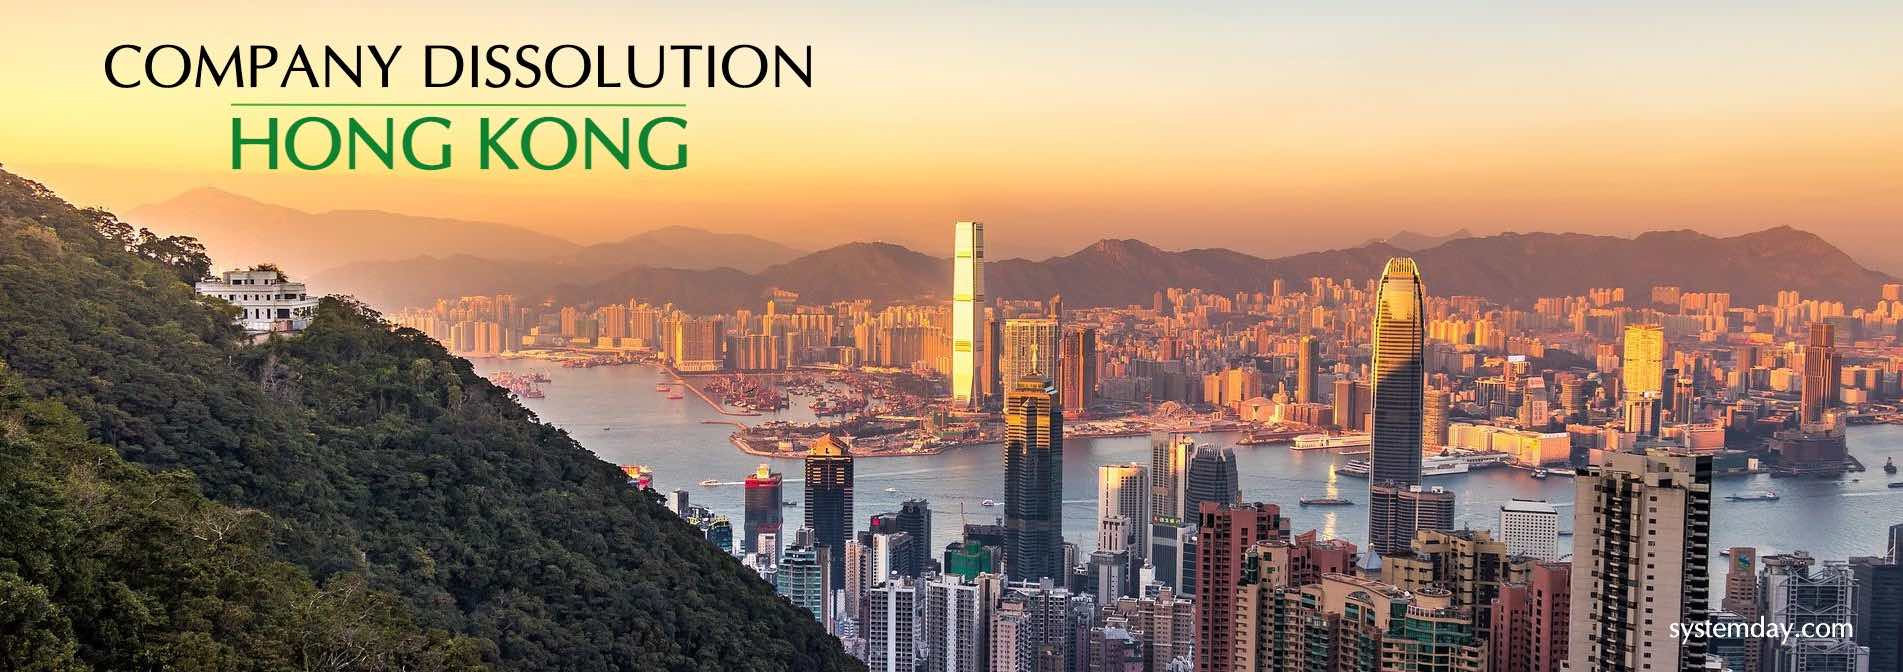 Hong Kong Company Dissolution